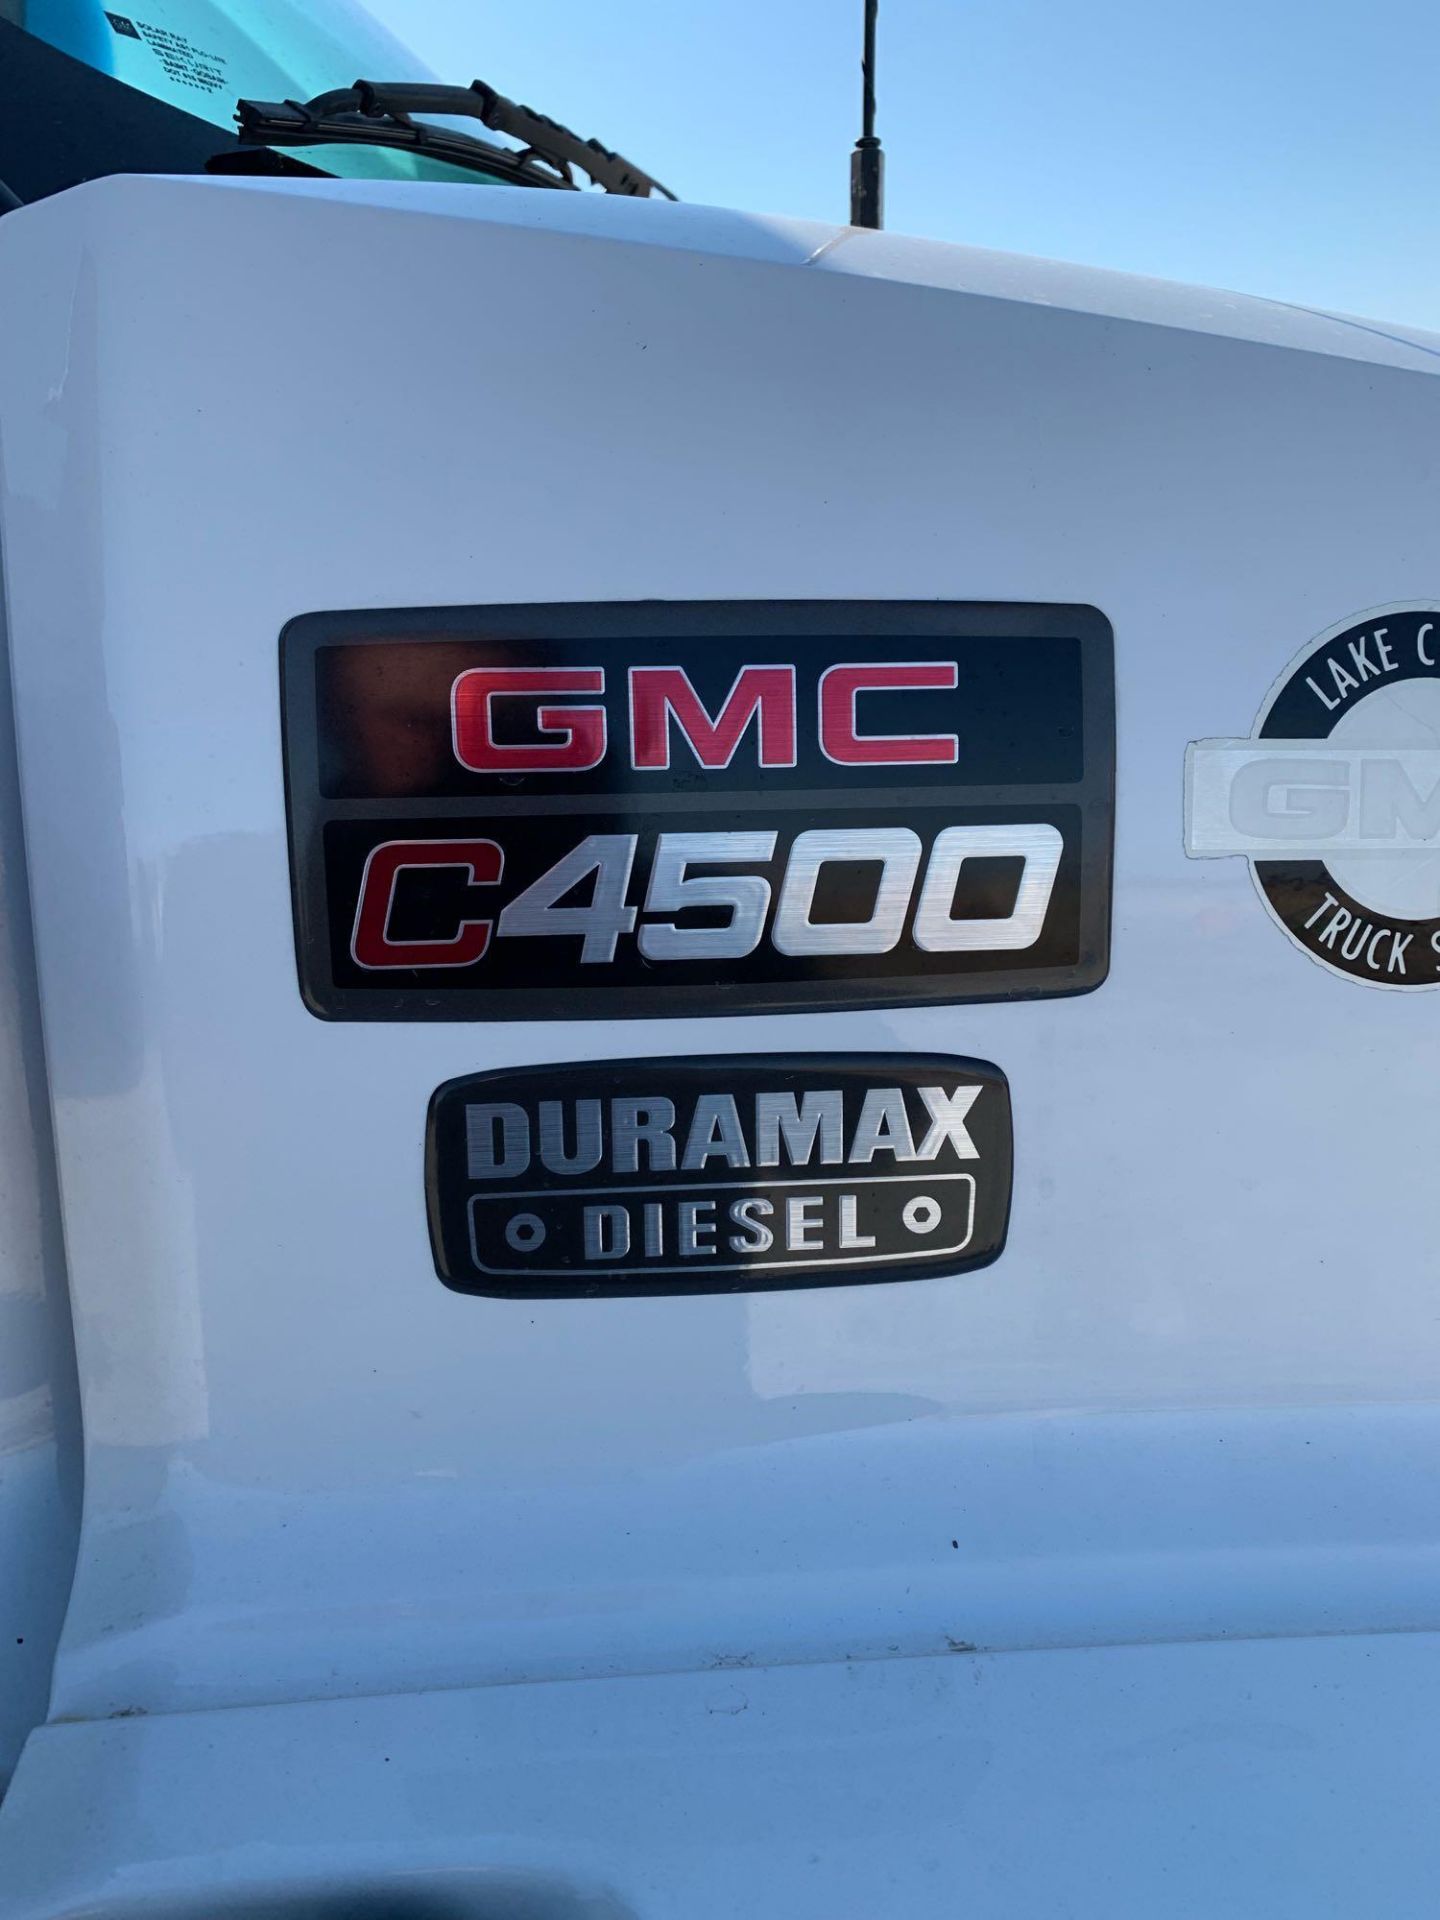 2003 GMC C4500 Duramax Diesel 6.6L Alison Transmission - Image 7 of 56